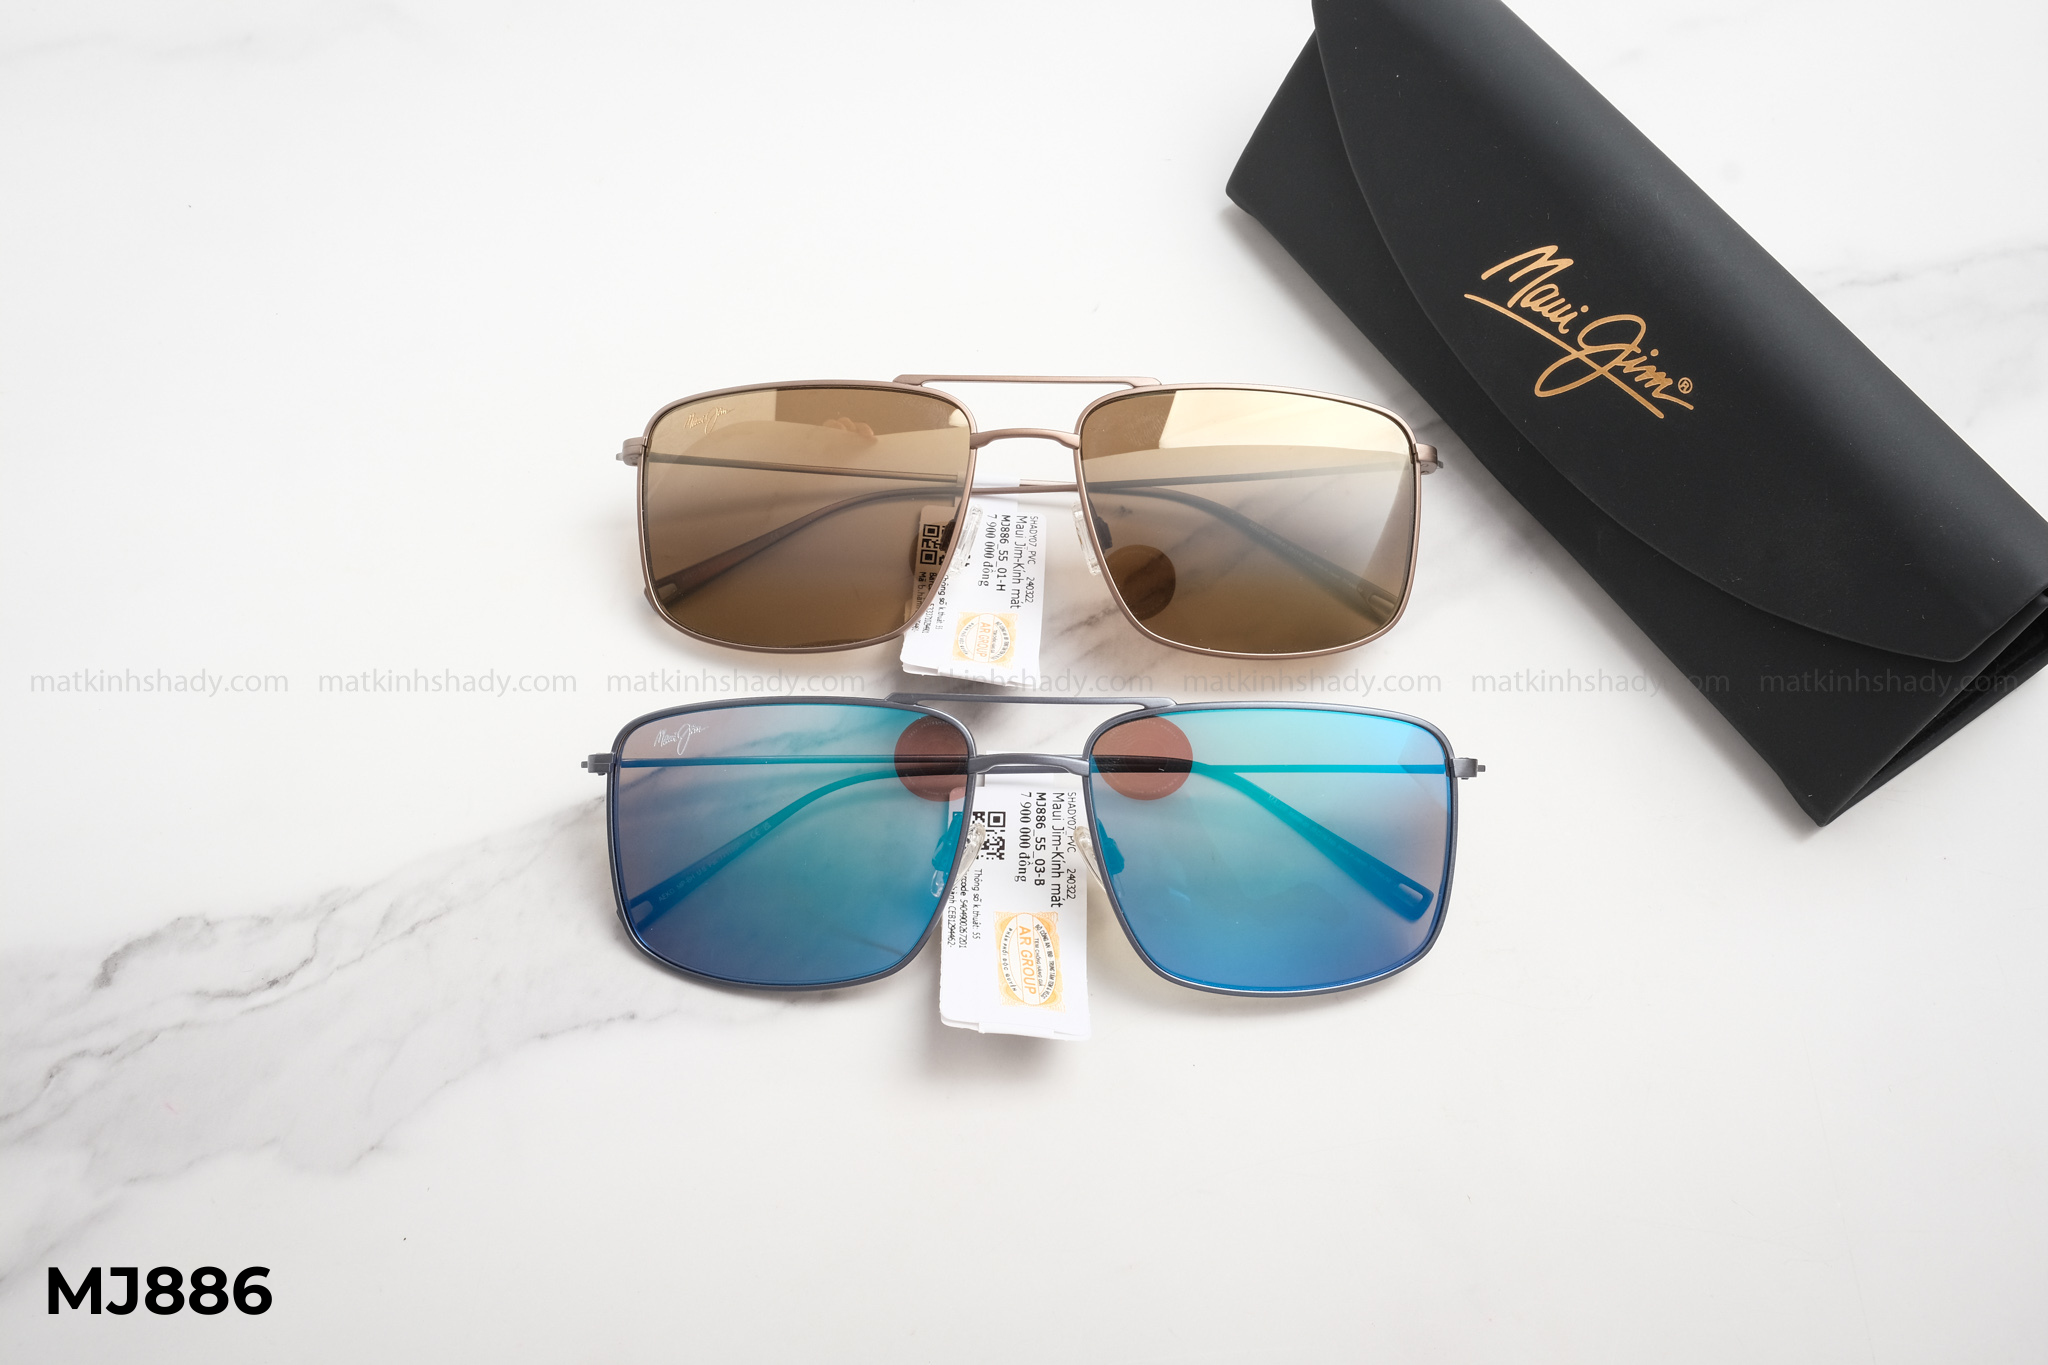  Maui Jim Eyewear - Sunglasses - MJ886 